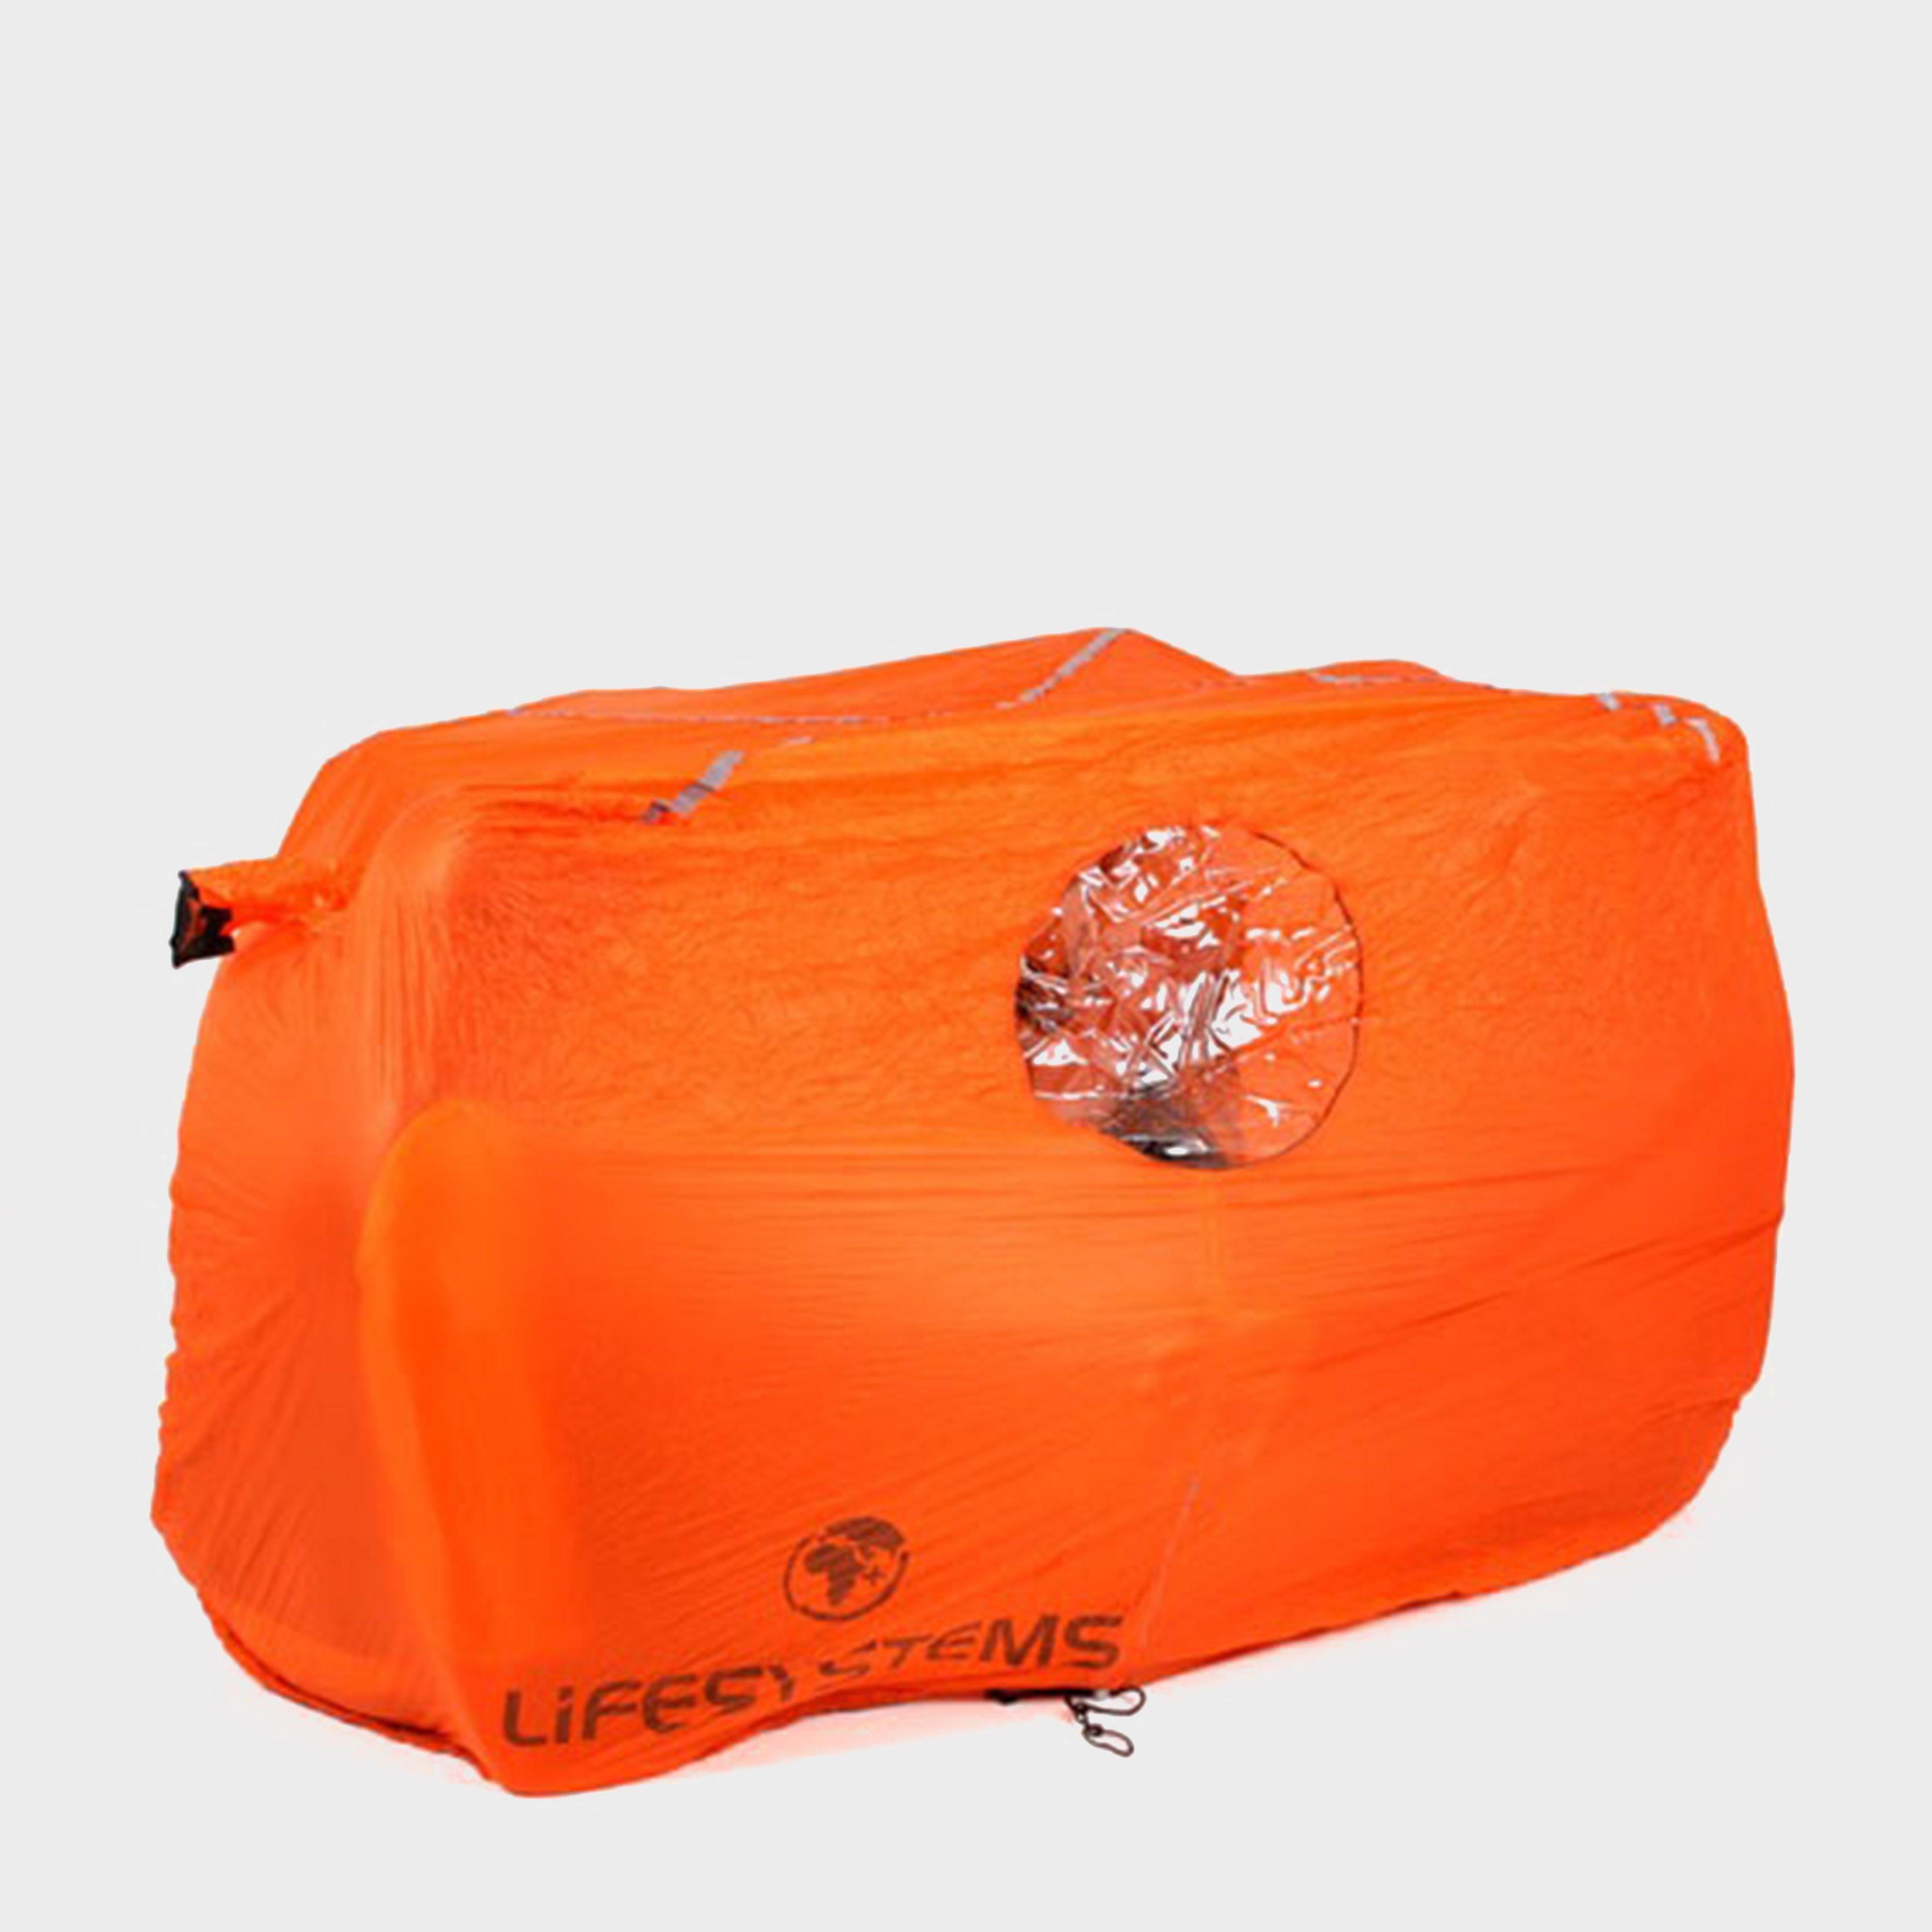  Lifesystems 4 Person Survival Shelter, Orange